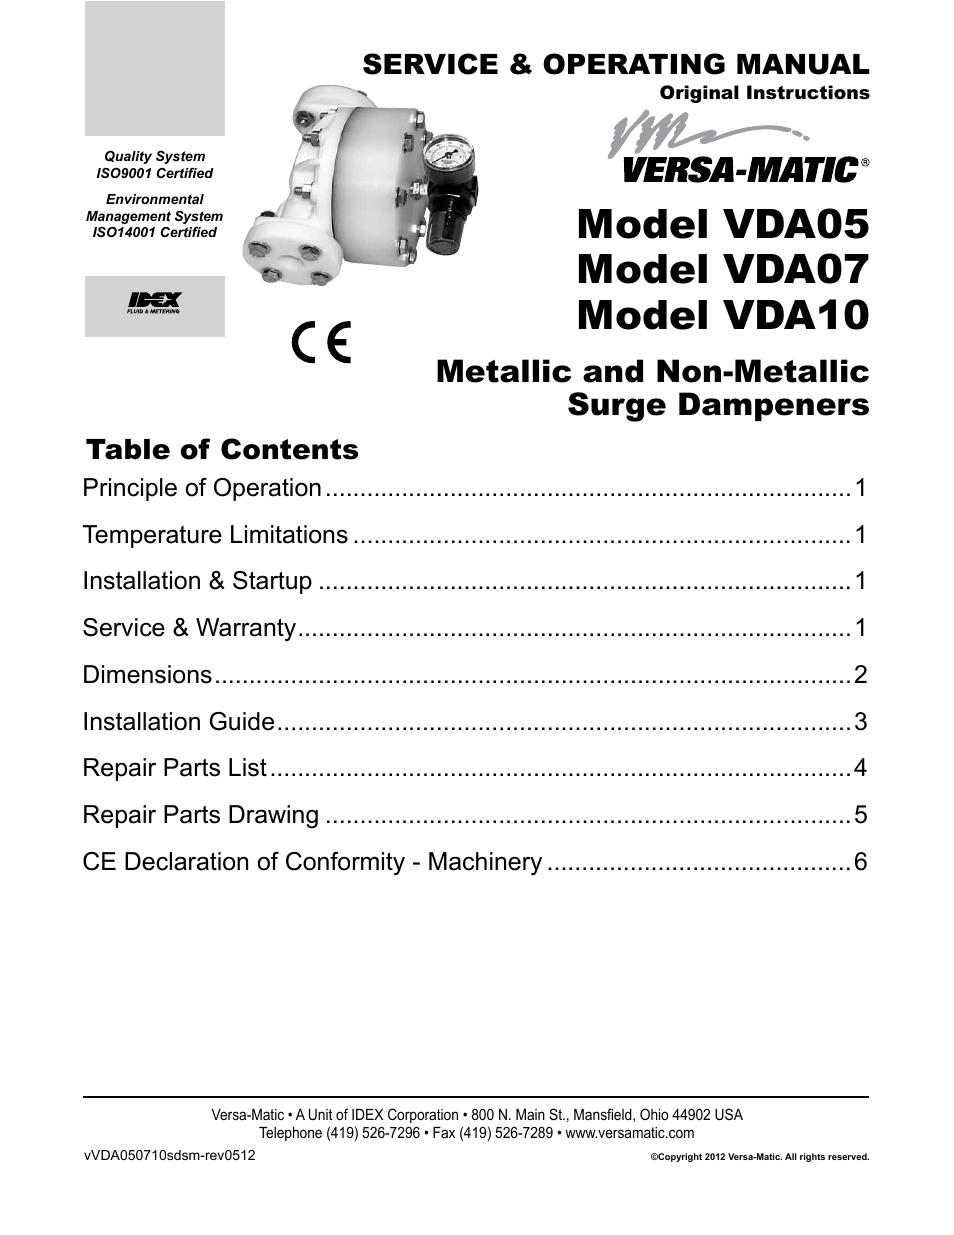 VDA05 Metallic and Non-Metallic Surge Dampeners